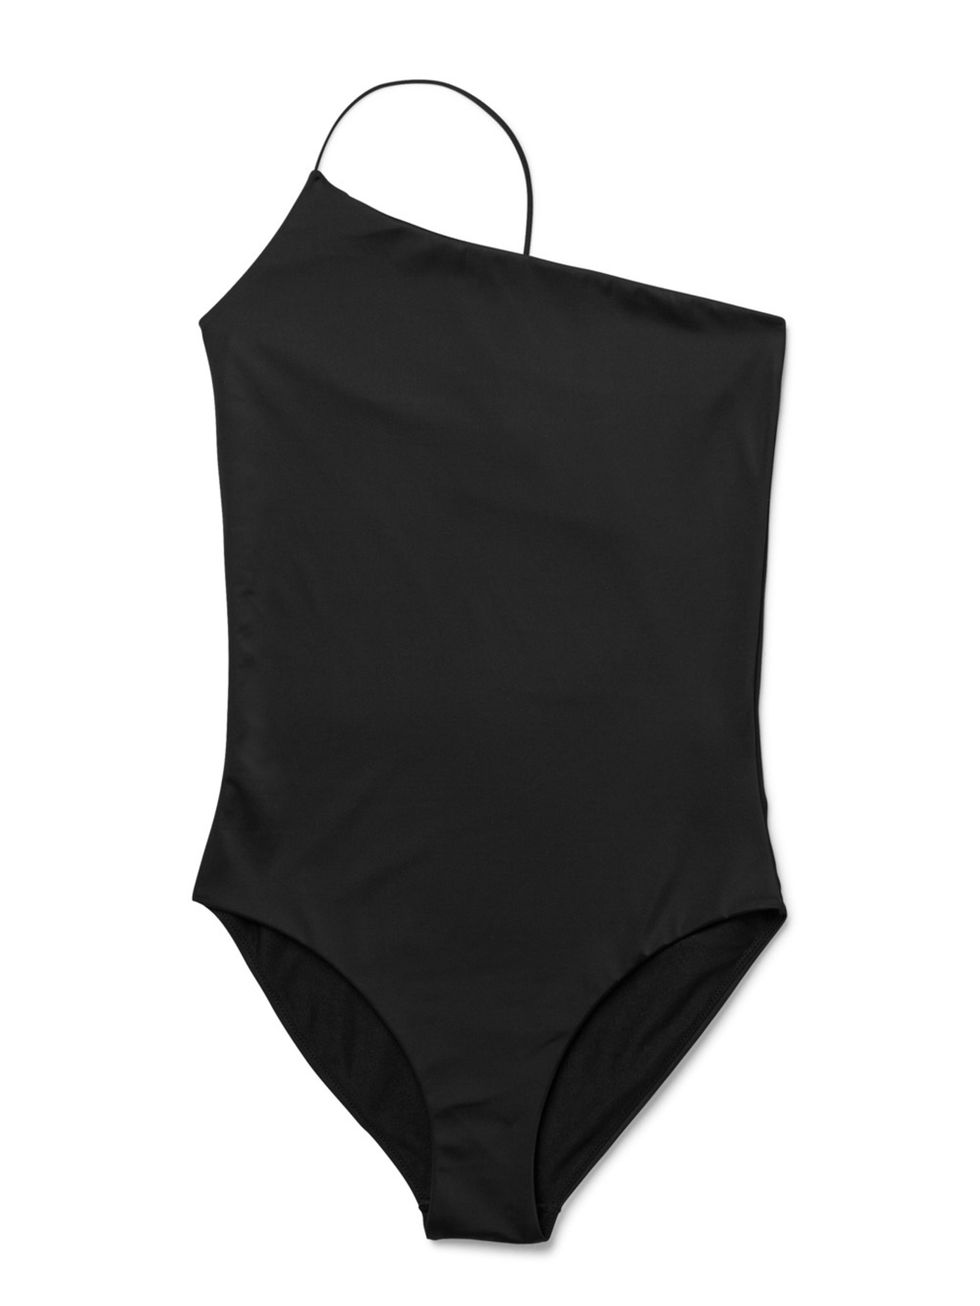 Product, Black, Swimwear, Undergarment, Symmetry, Briefs, Underpants, 